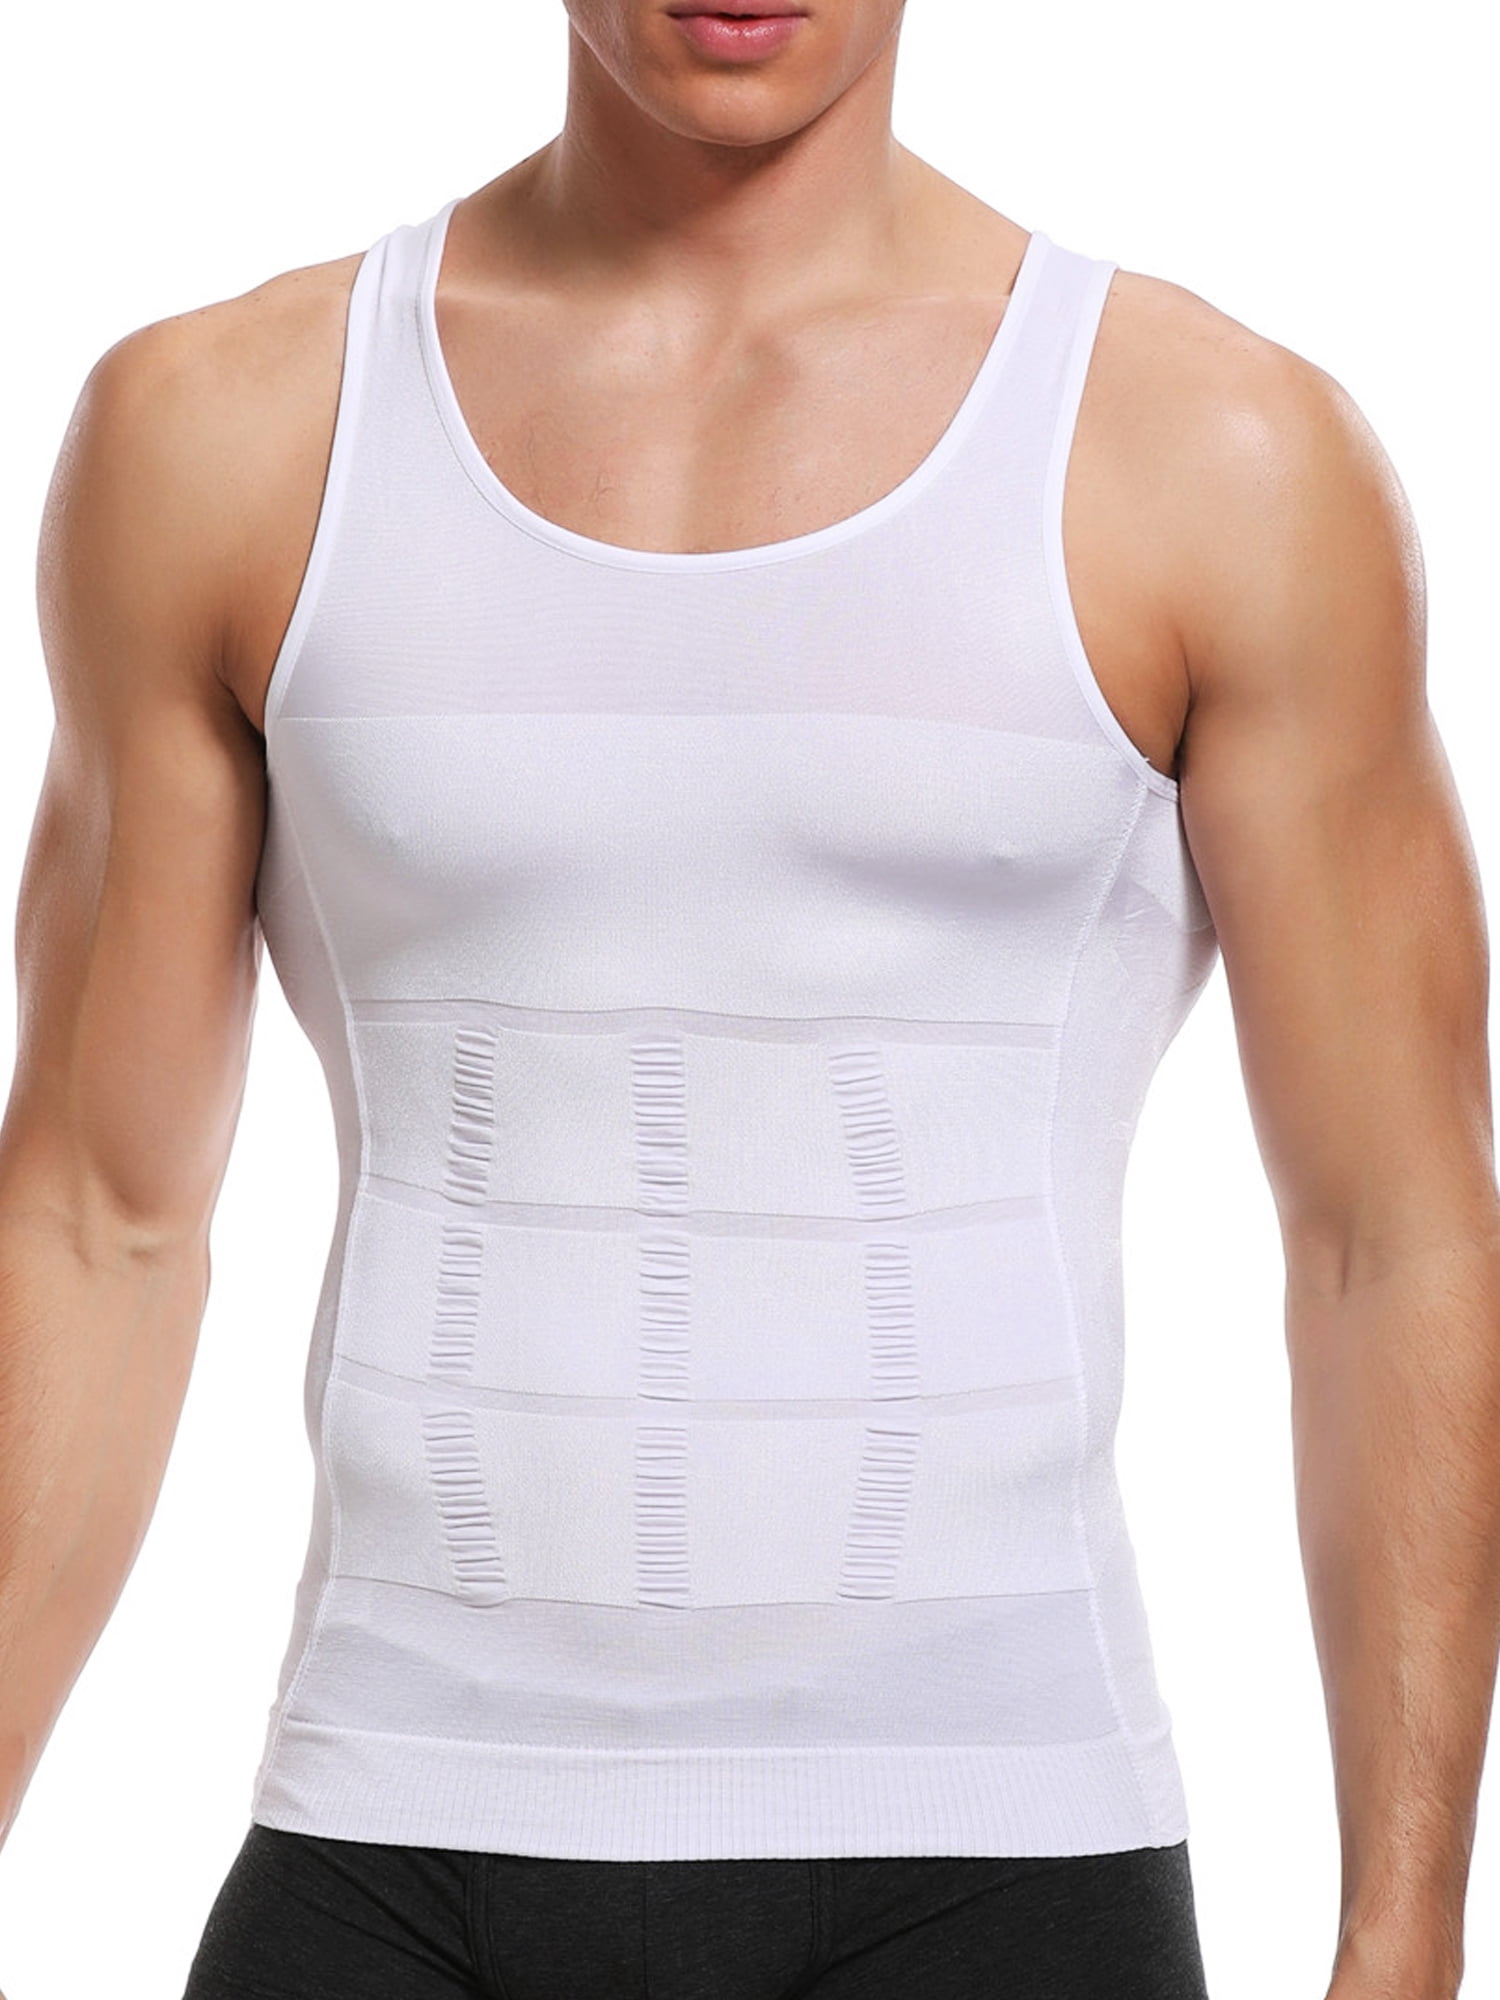 QRIC Mens Gynecomastia Compression Shirts Slimming Undershirt Body ...